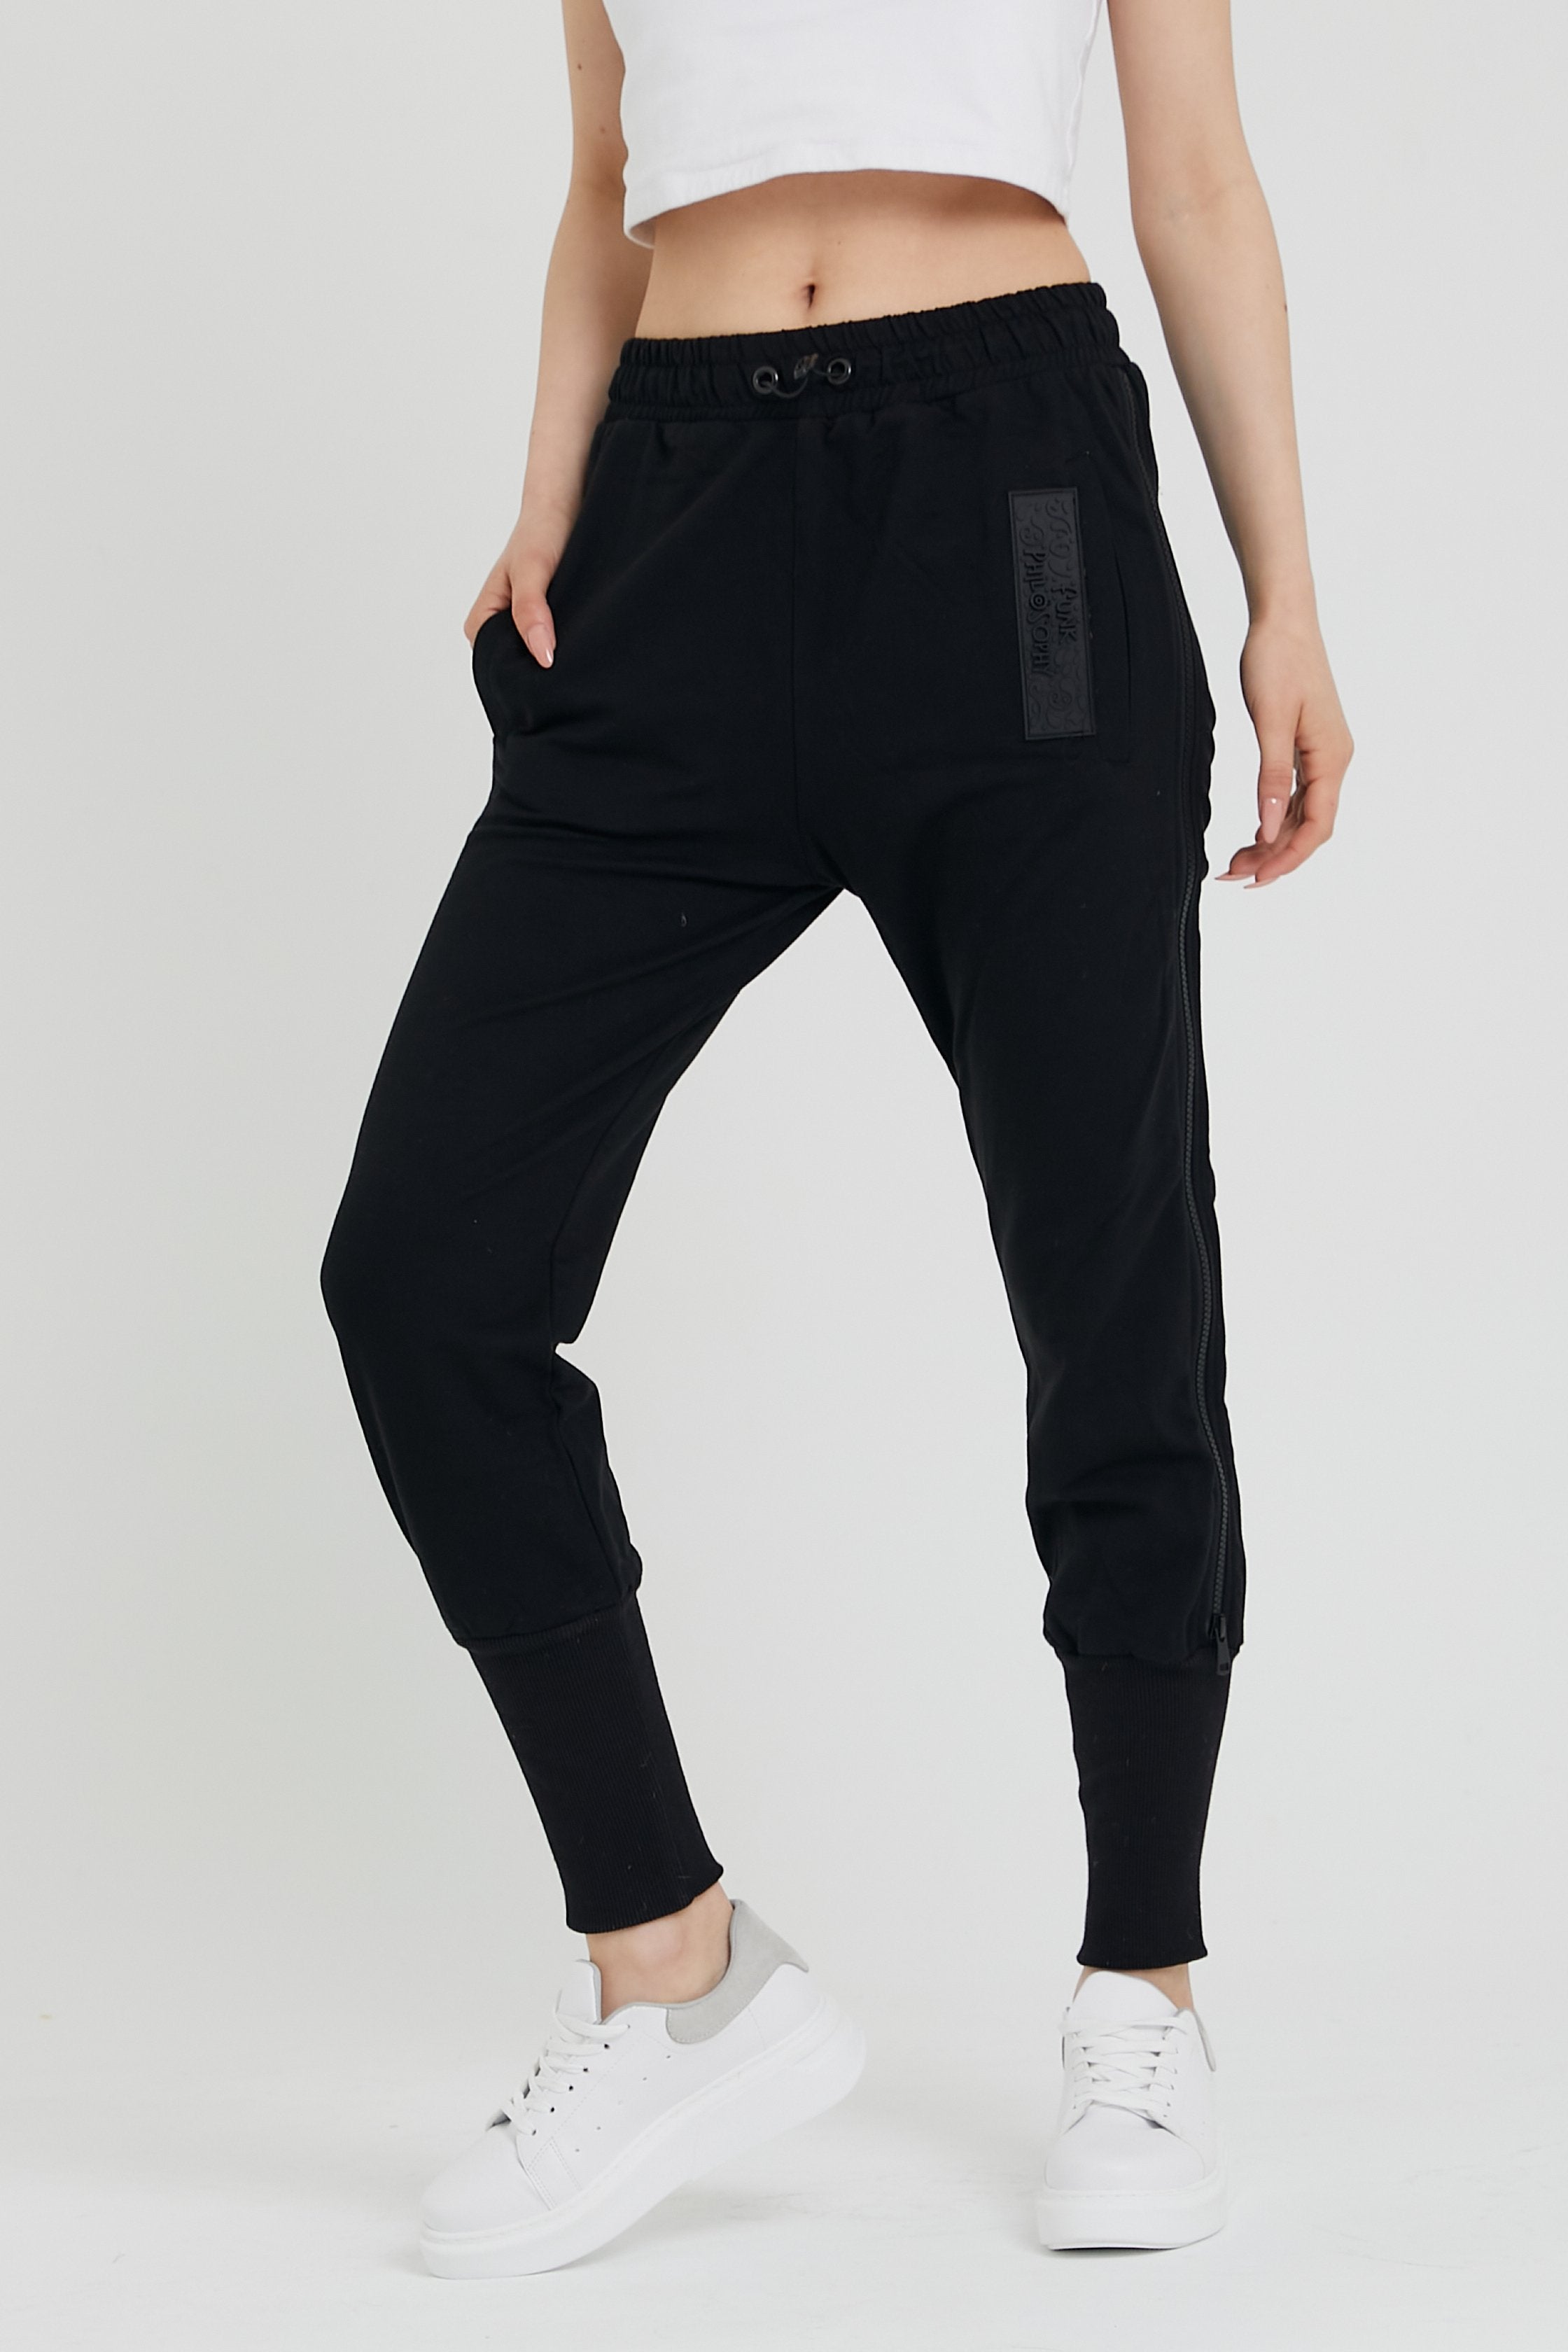 Full Side-Zipper Black Pants 4020